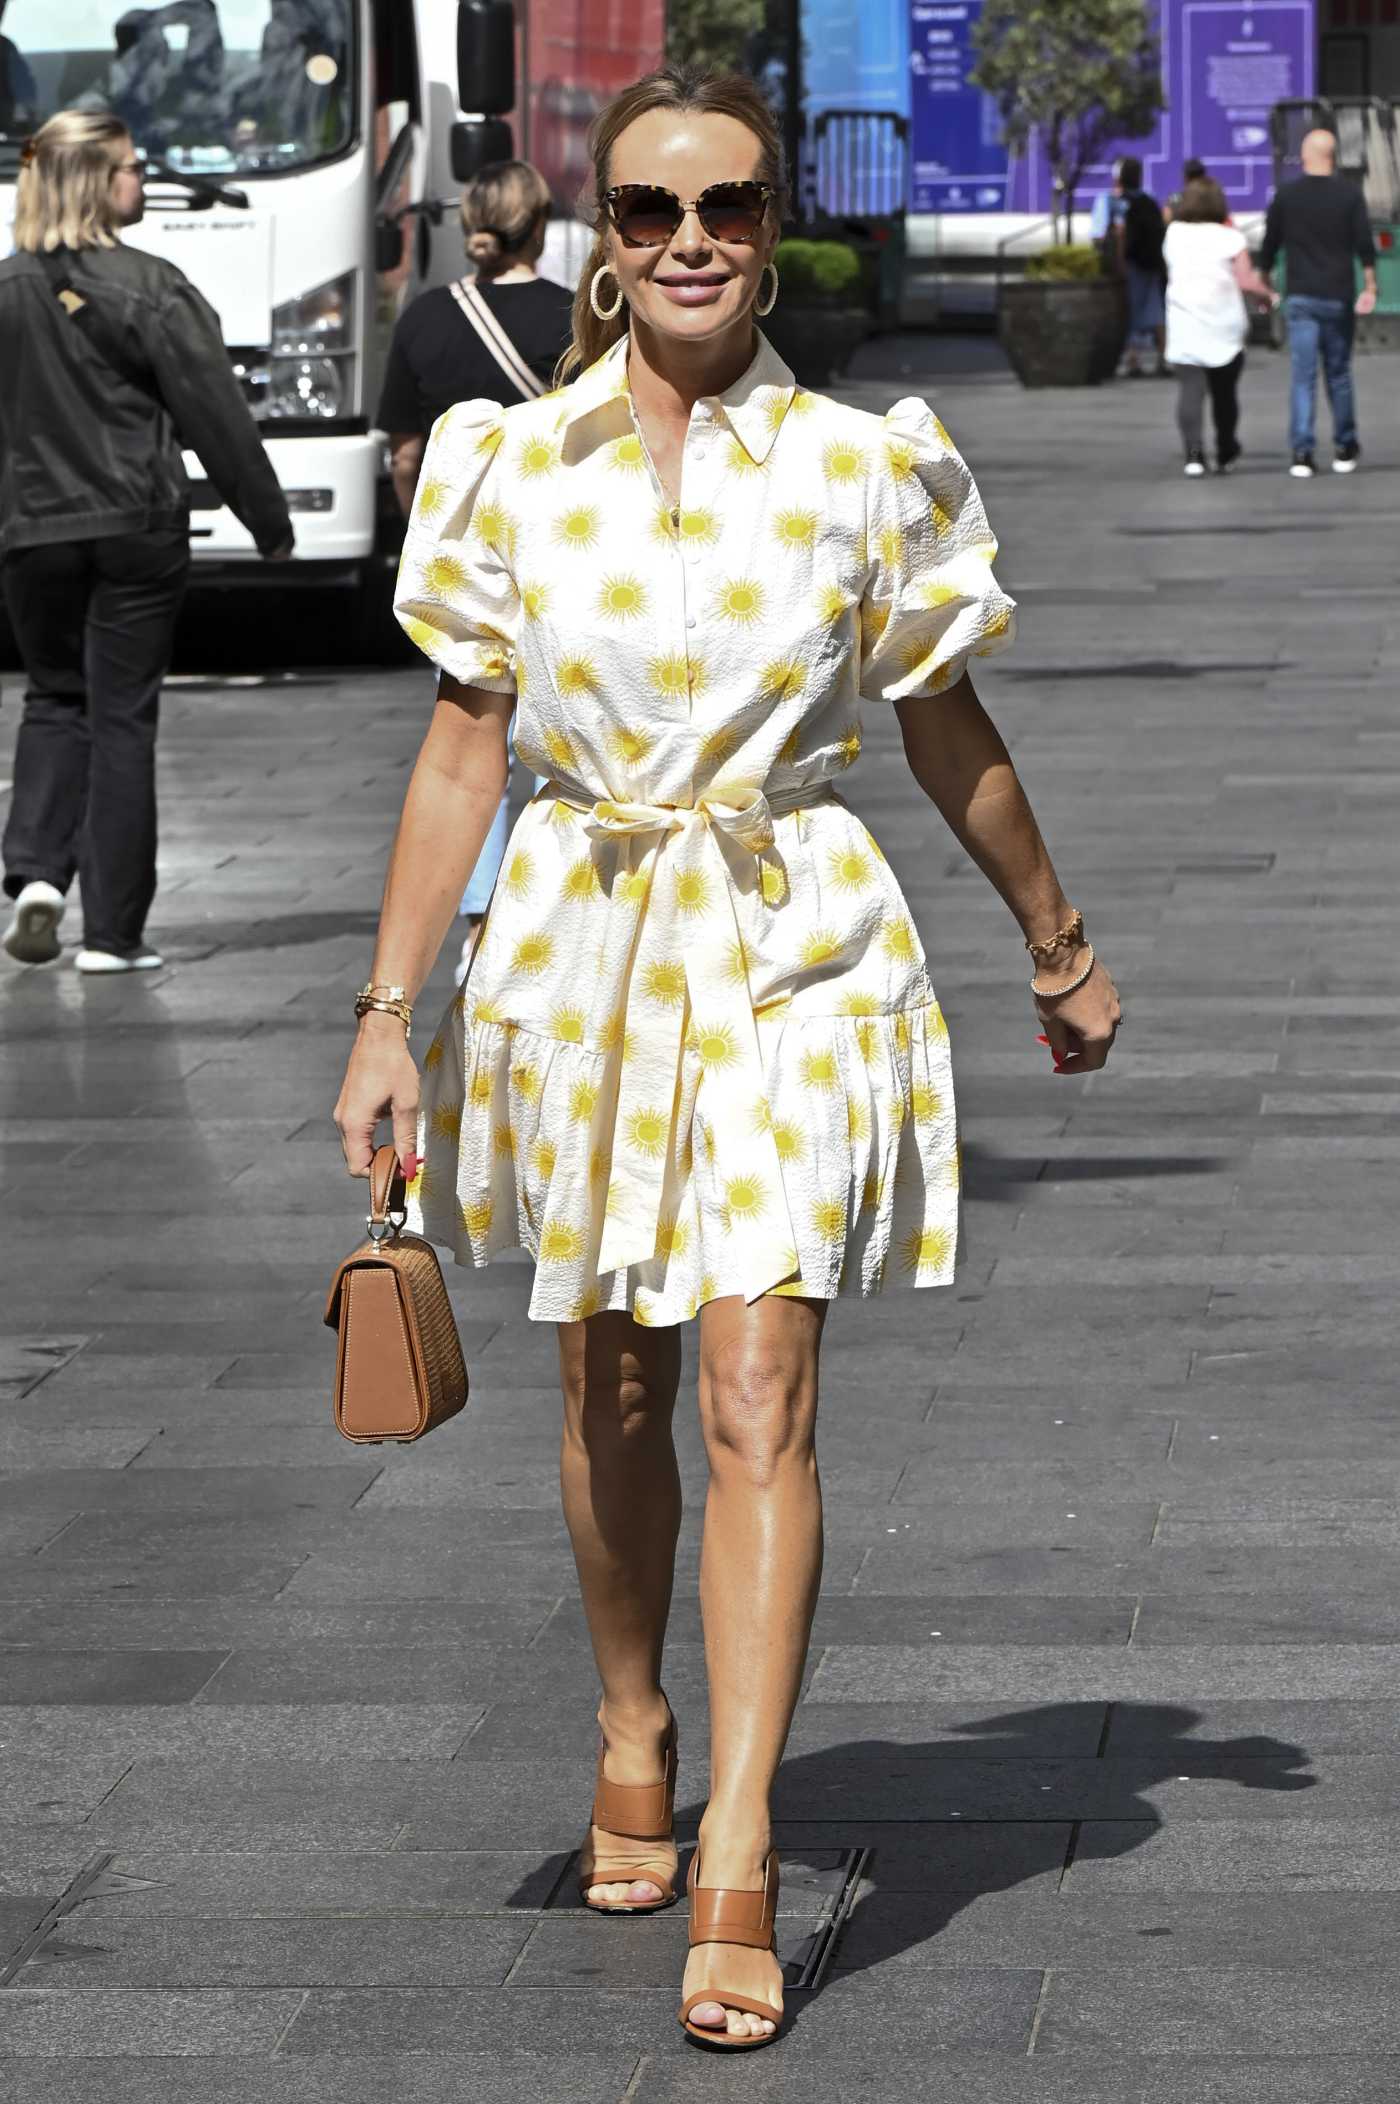 Amanda Holden in a Sun Print Dress Leaves the Global Studios in London 07/04/2022